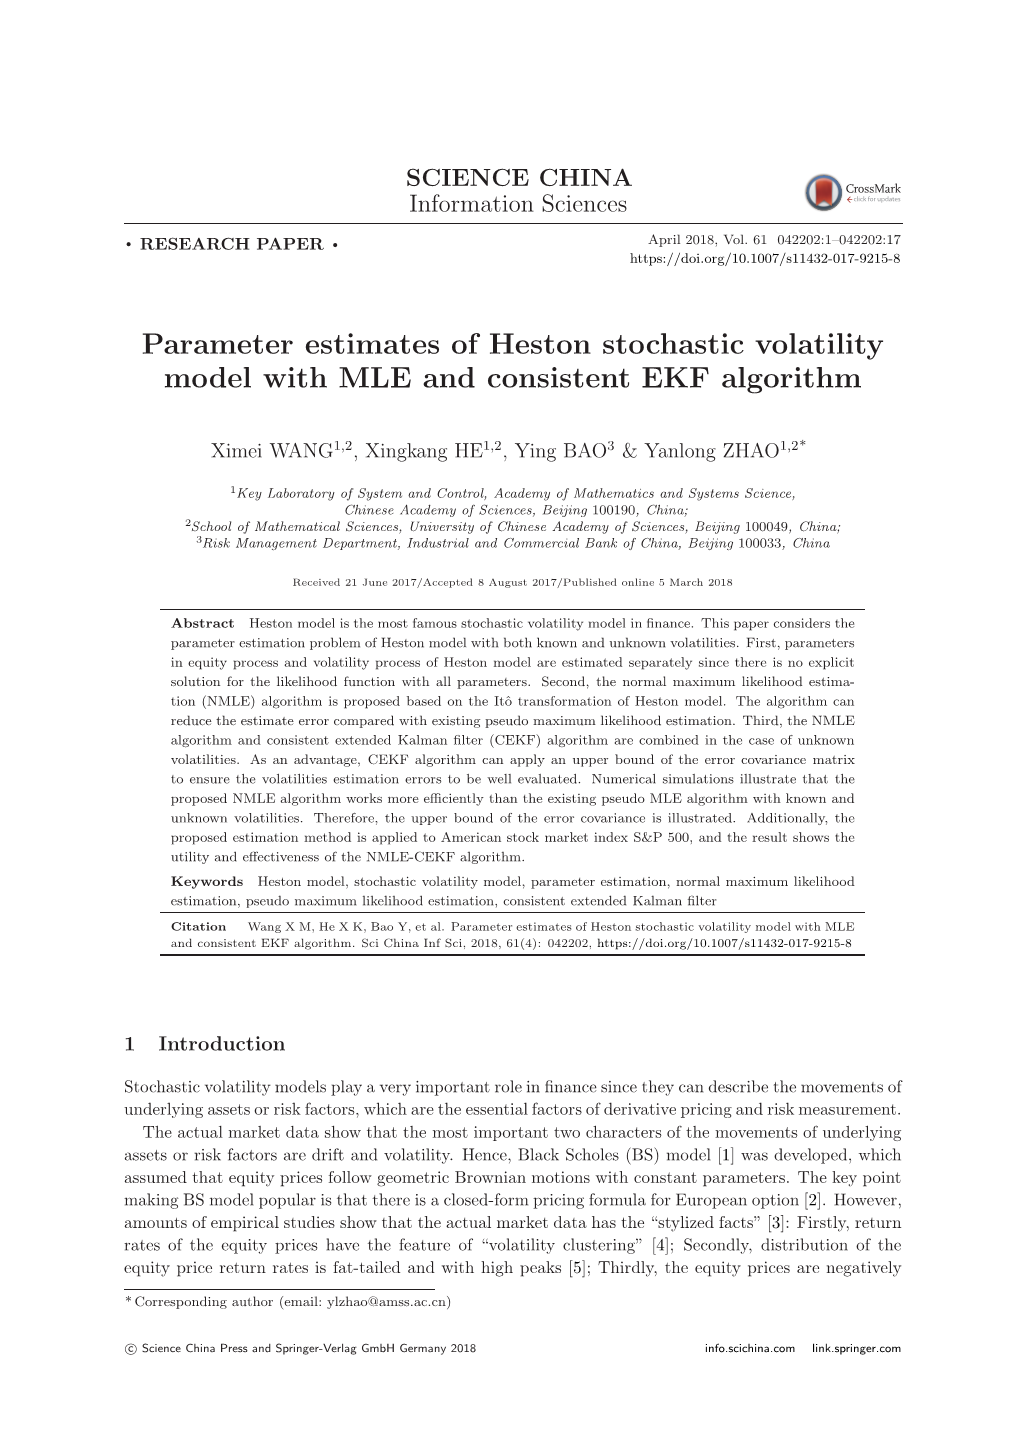 Parameter Estimates of Heston Stochastic Volatility Model with MLE and Consistent EKF Algorithm